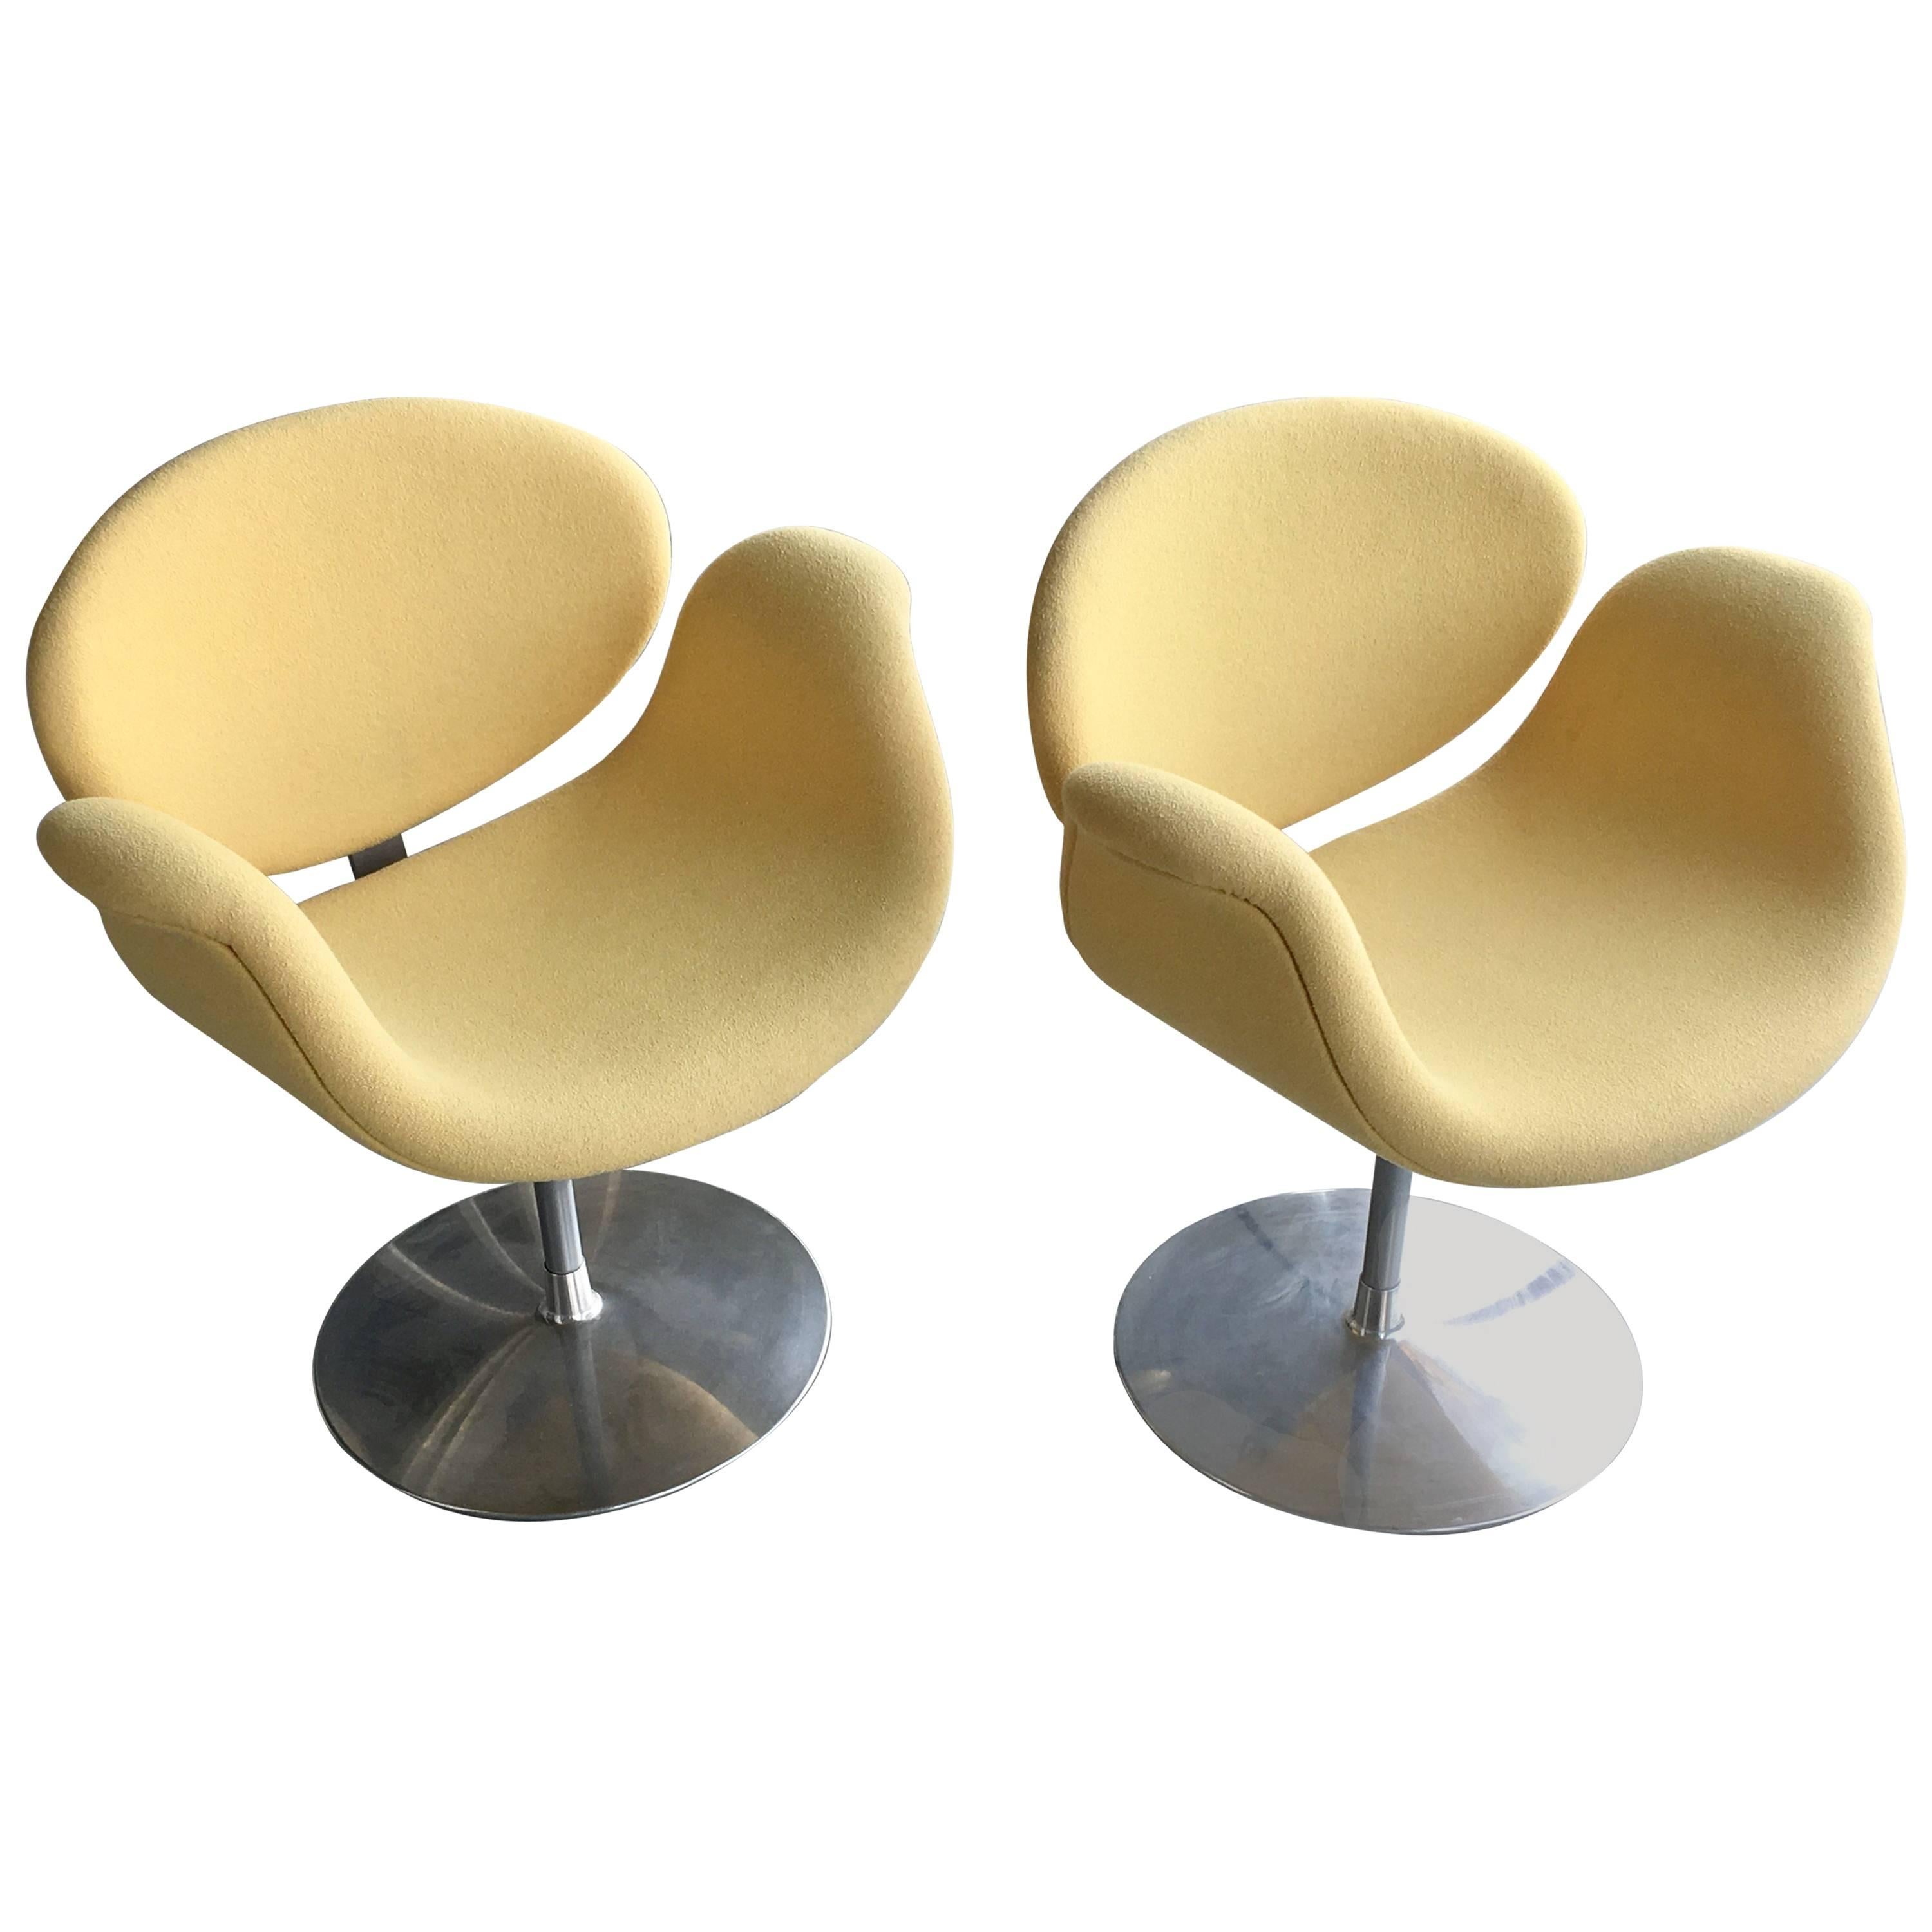 Pierre Paulin Little Tulip Pair of Chairs by Artifort